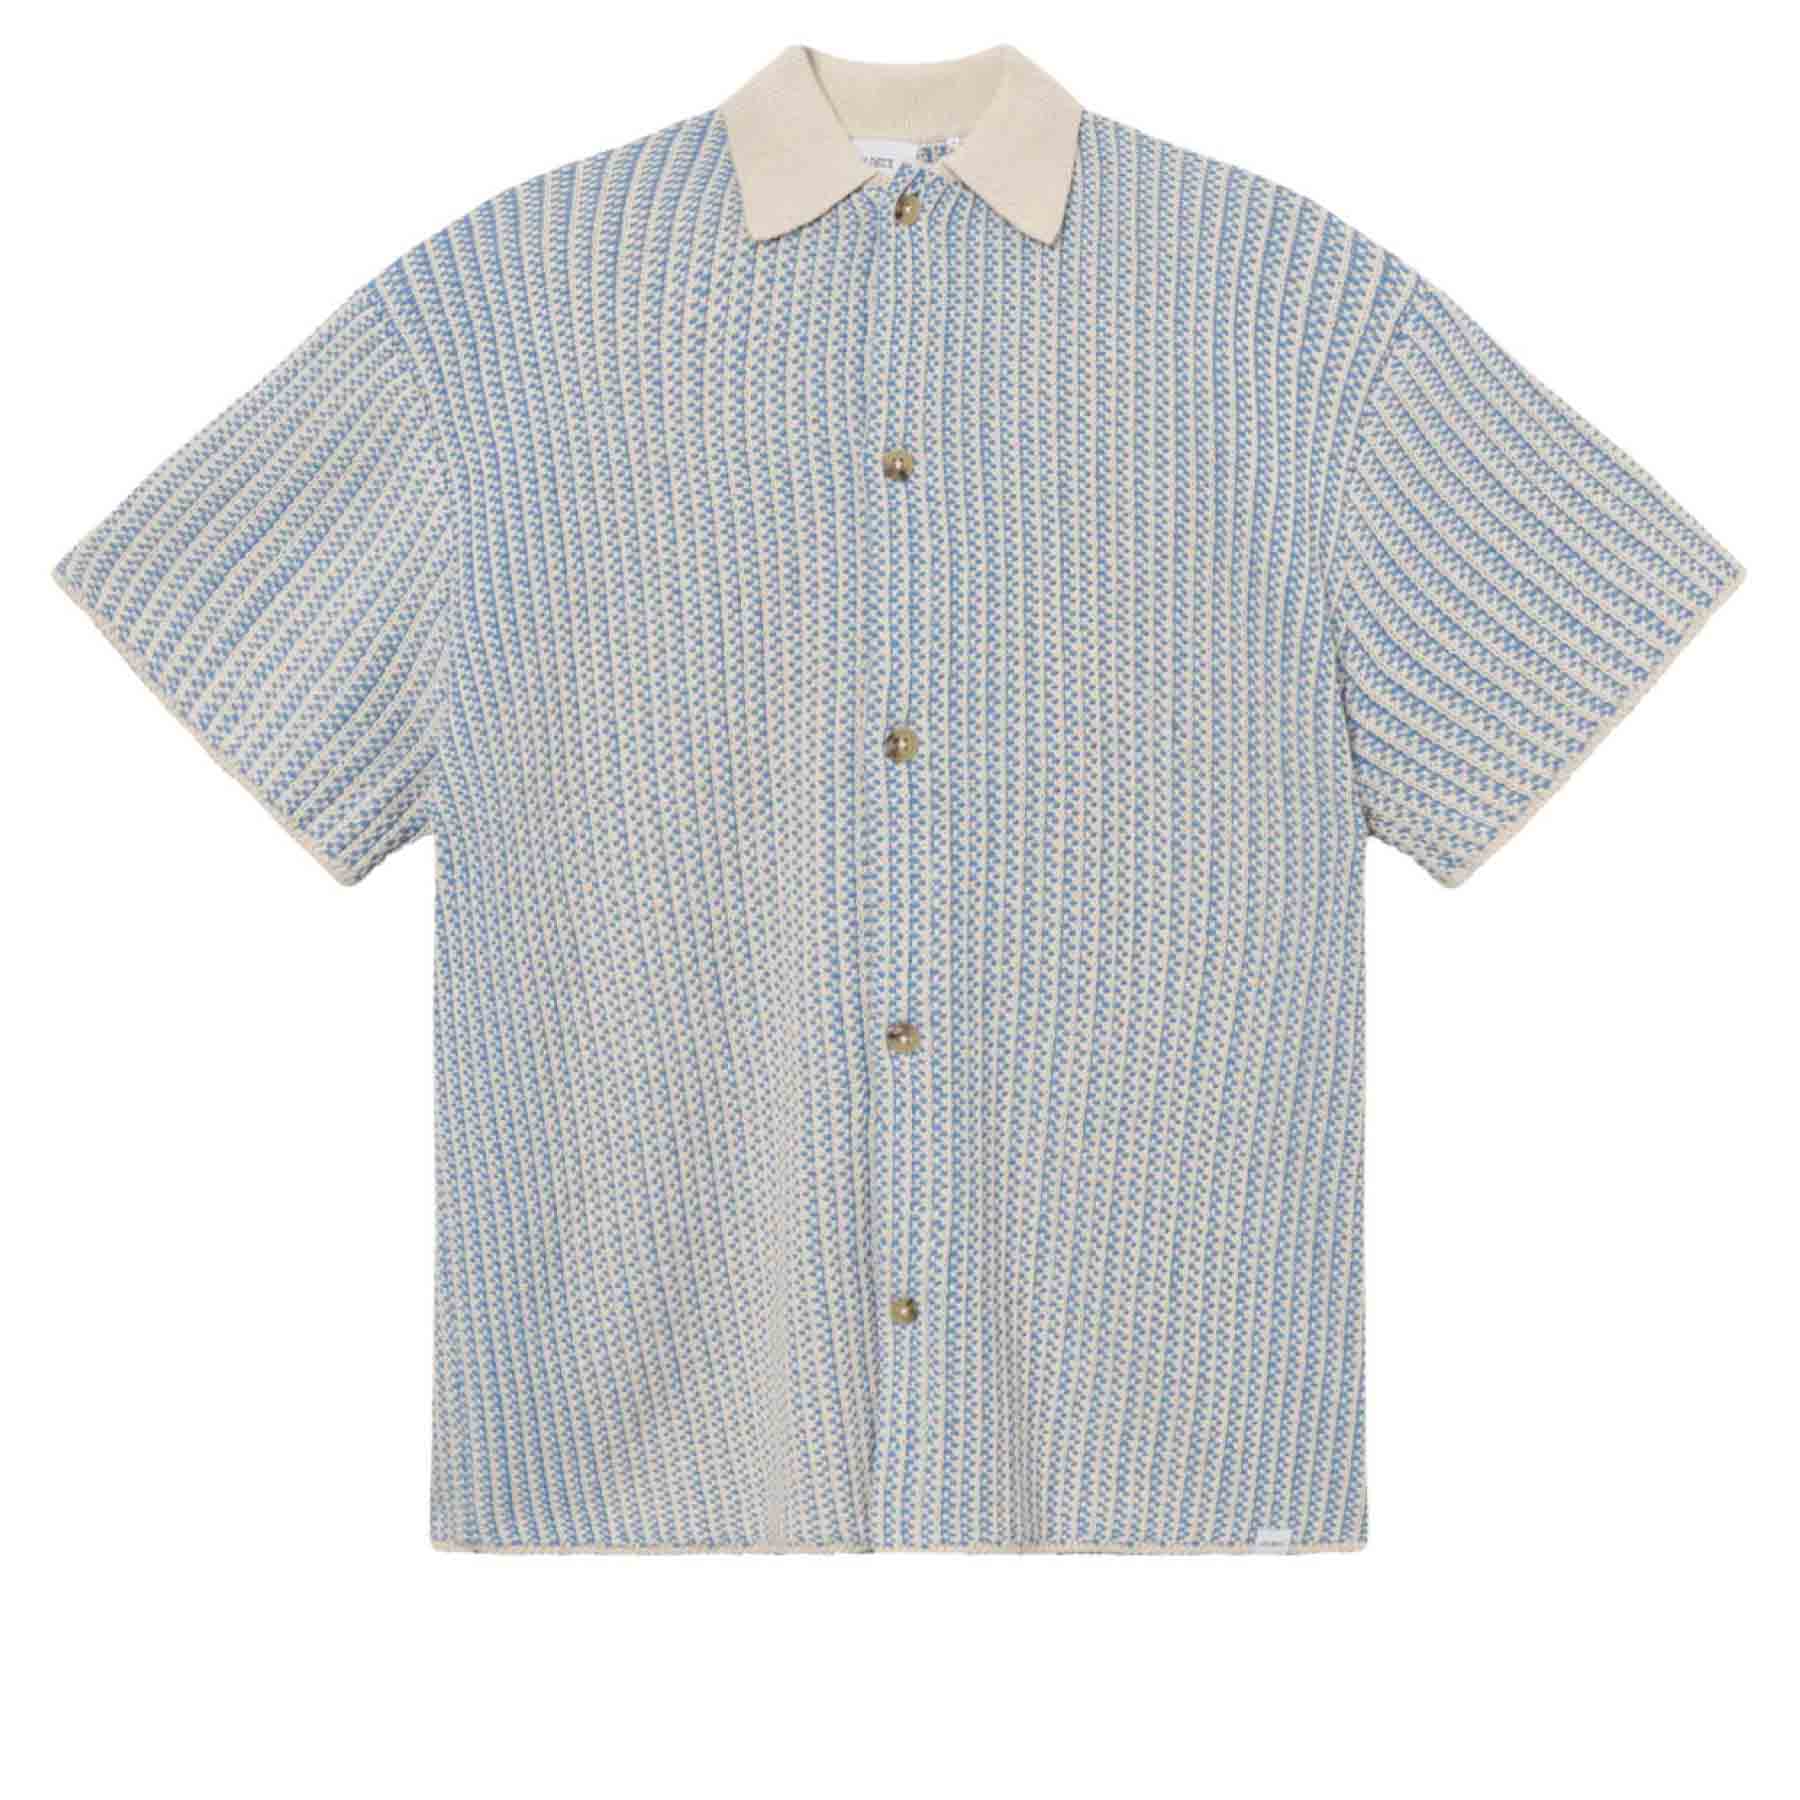 Easton Knitted SS Shirt Washed Denim Blue / Ivory